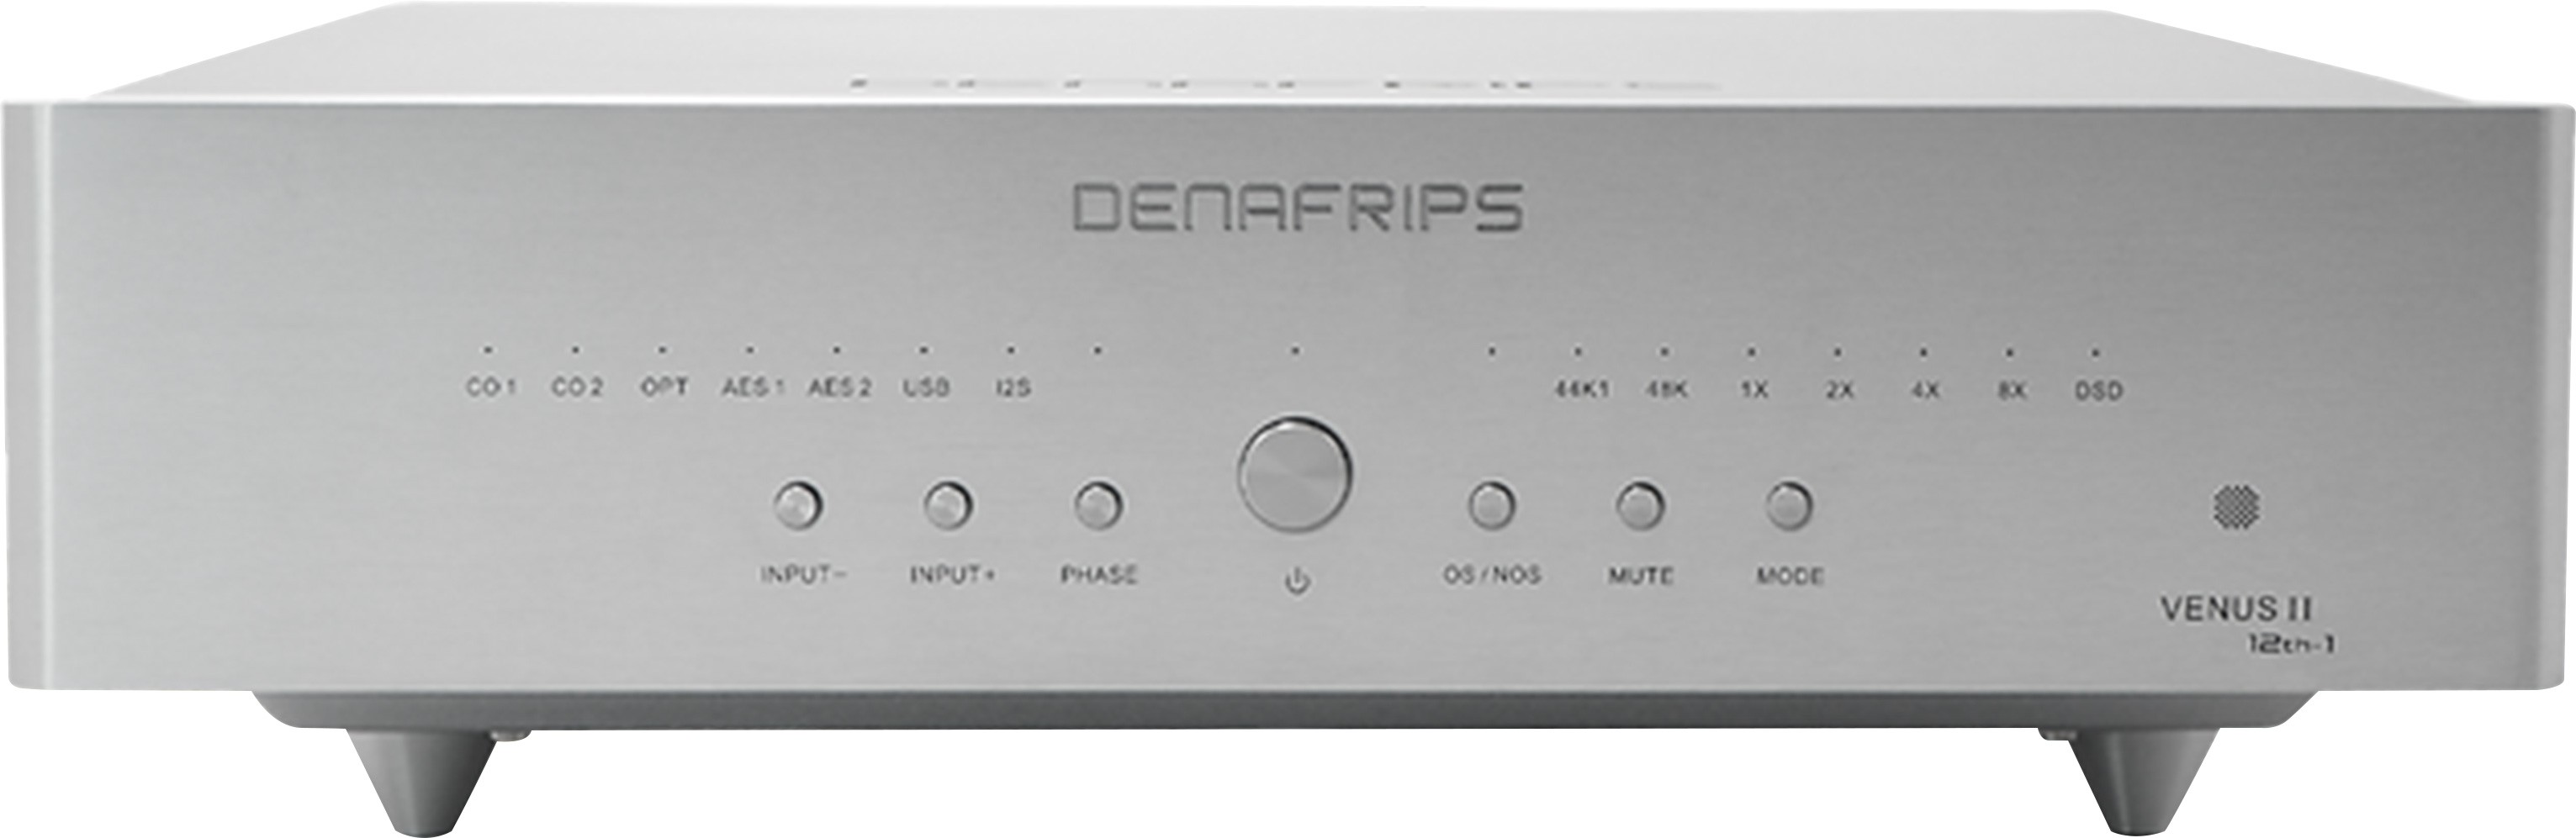 DENAFRIPS VENUS II 12TH-1 Balanced R2R DAC 24bit 1536kHz DSD1024 Silver